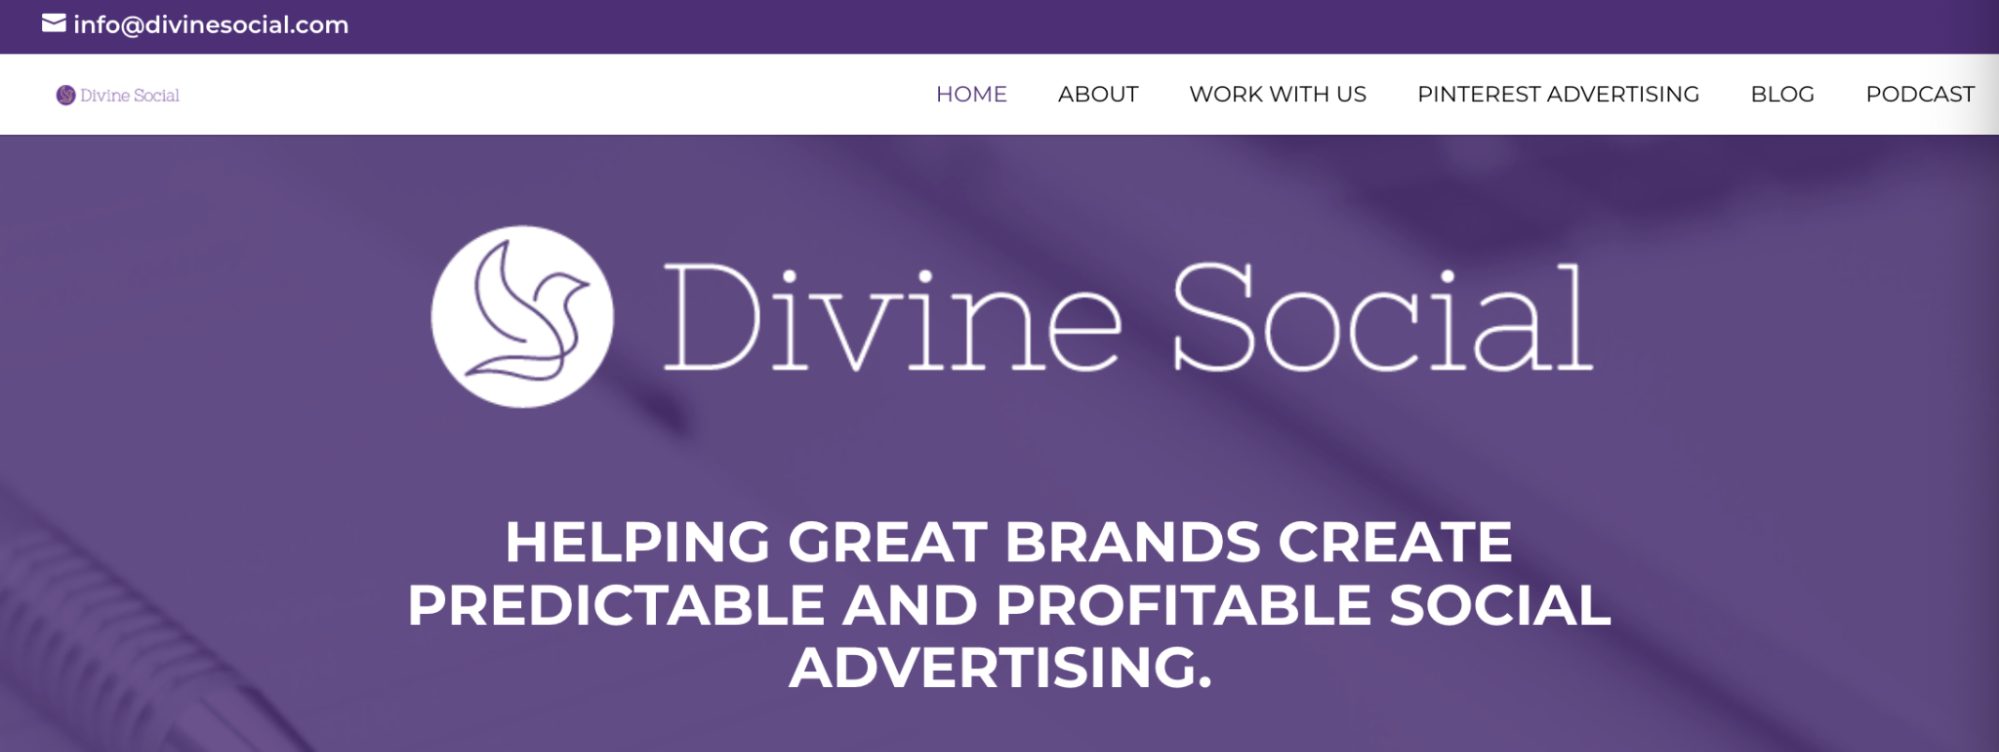 Divine Social